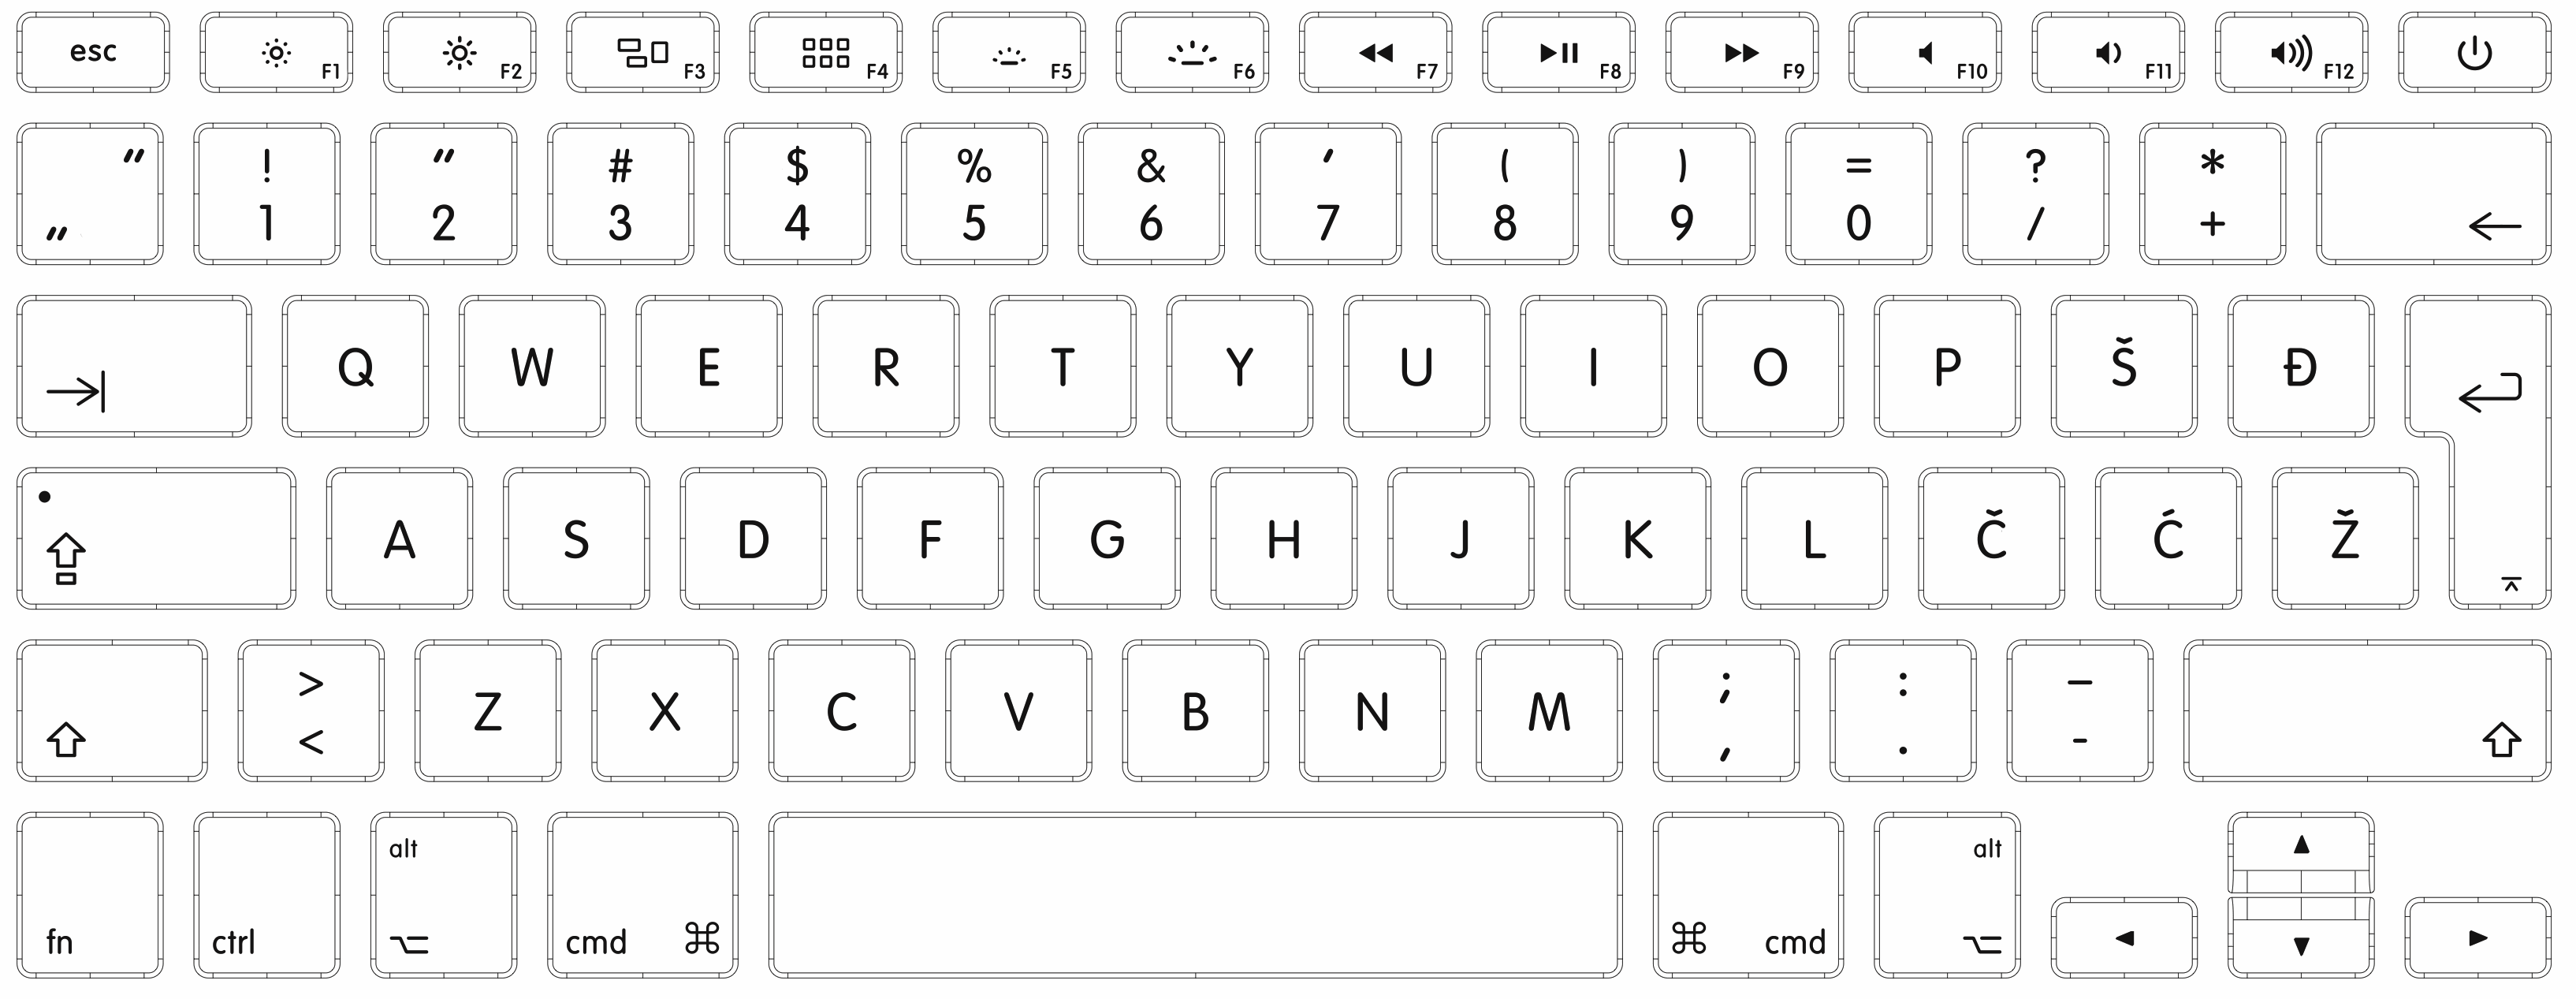 swedish qwerty keyboard layout for ipad pro